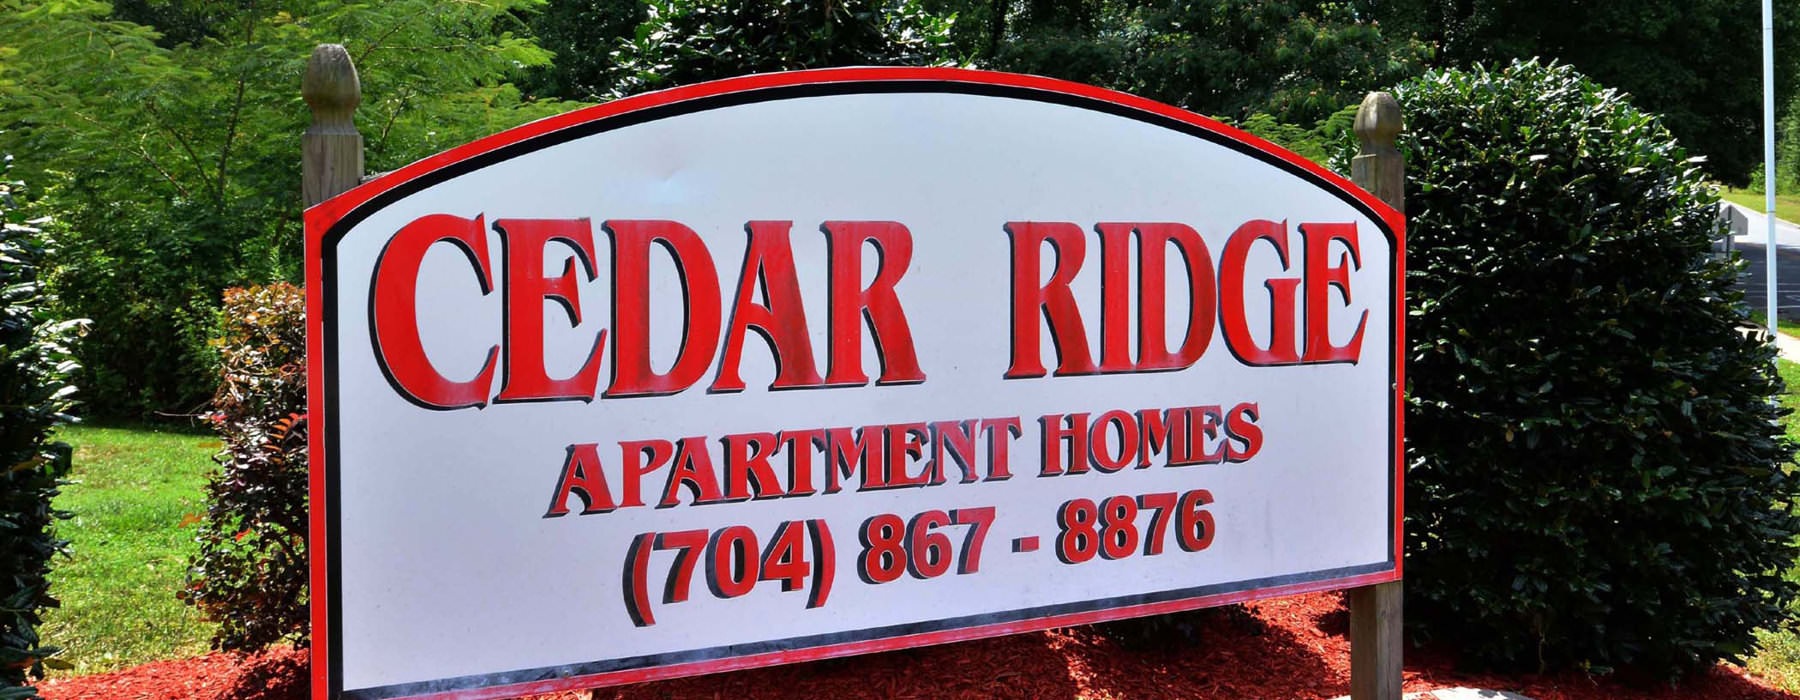 Cedar Ridge signage